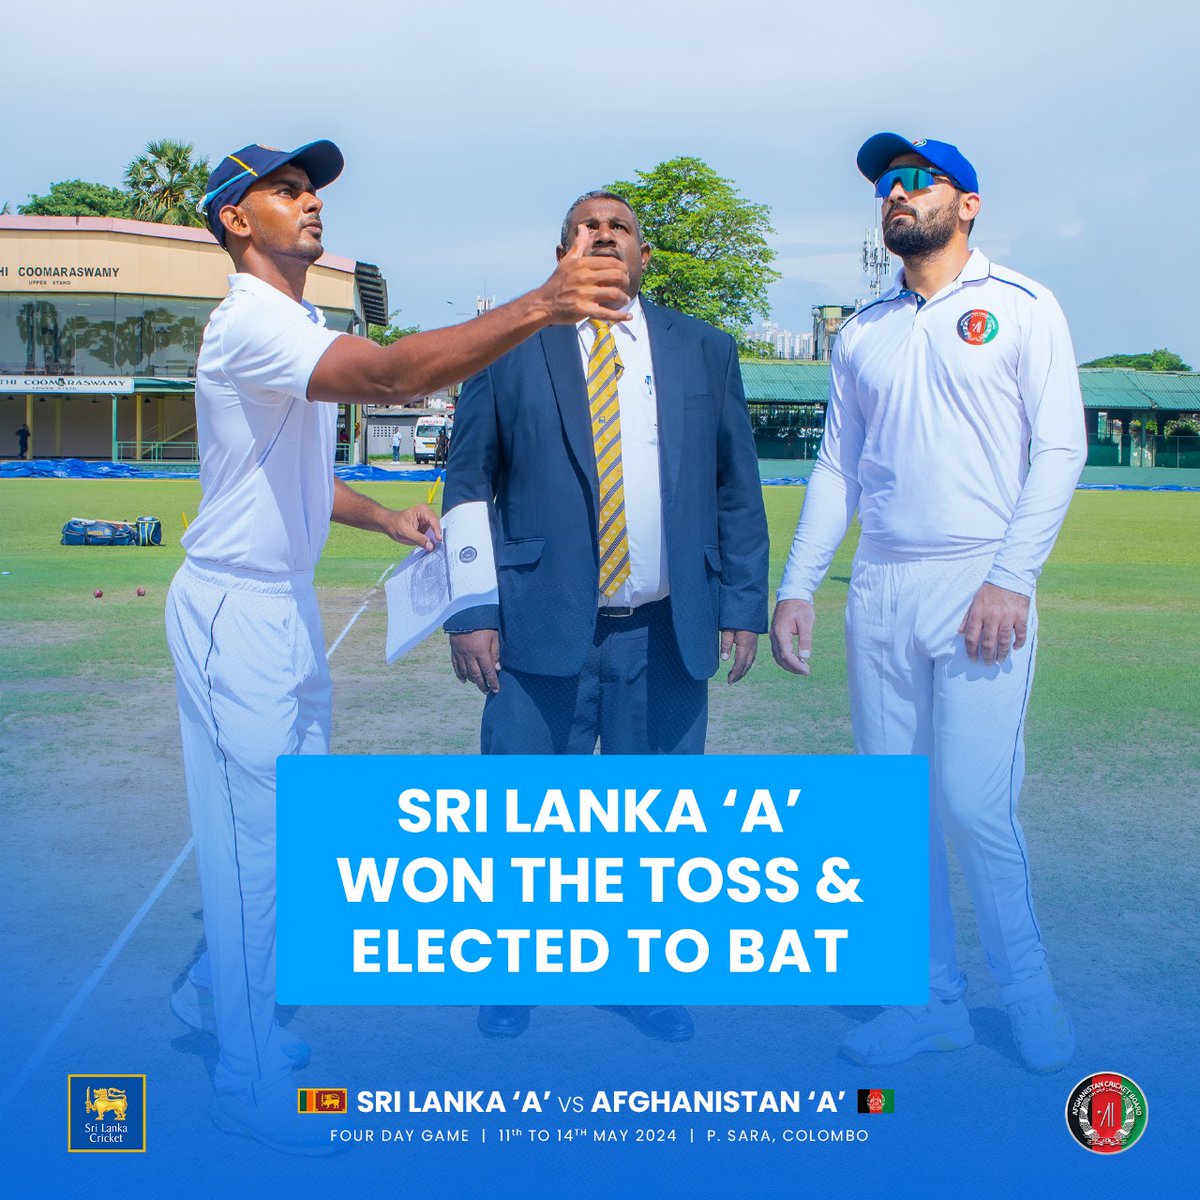 Sri Lanka 'A' skipper Pasindu Sooriyabandara won the toss and elected to bat first at P Sara Oval. #SLvAFG #SLATeam